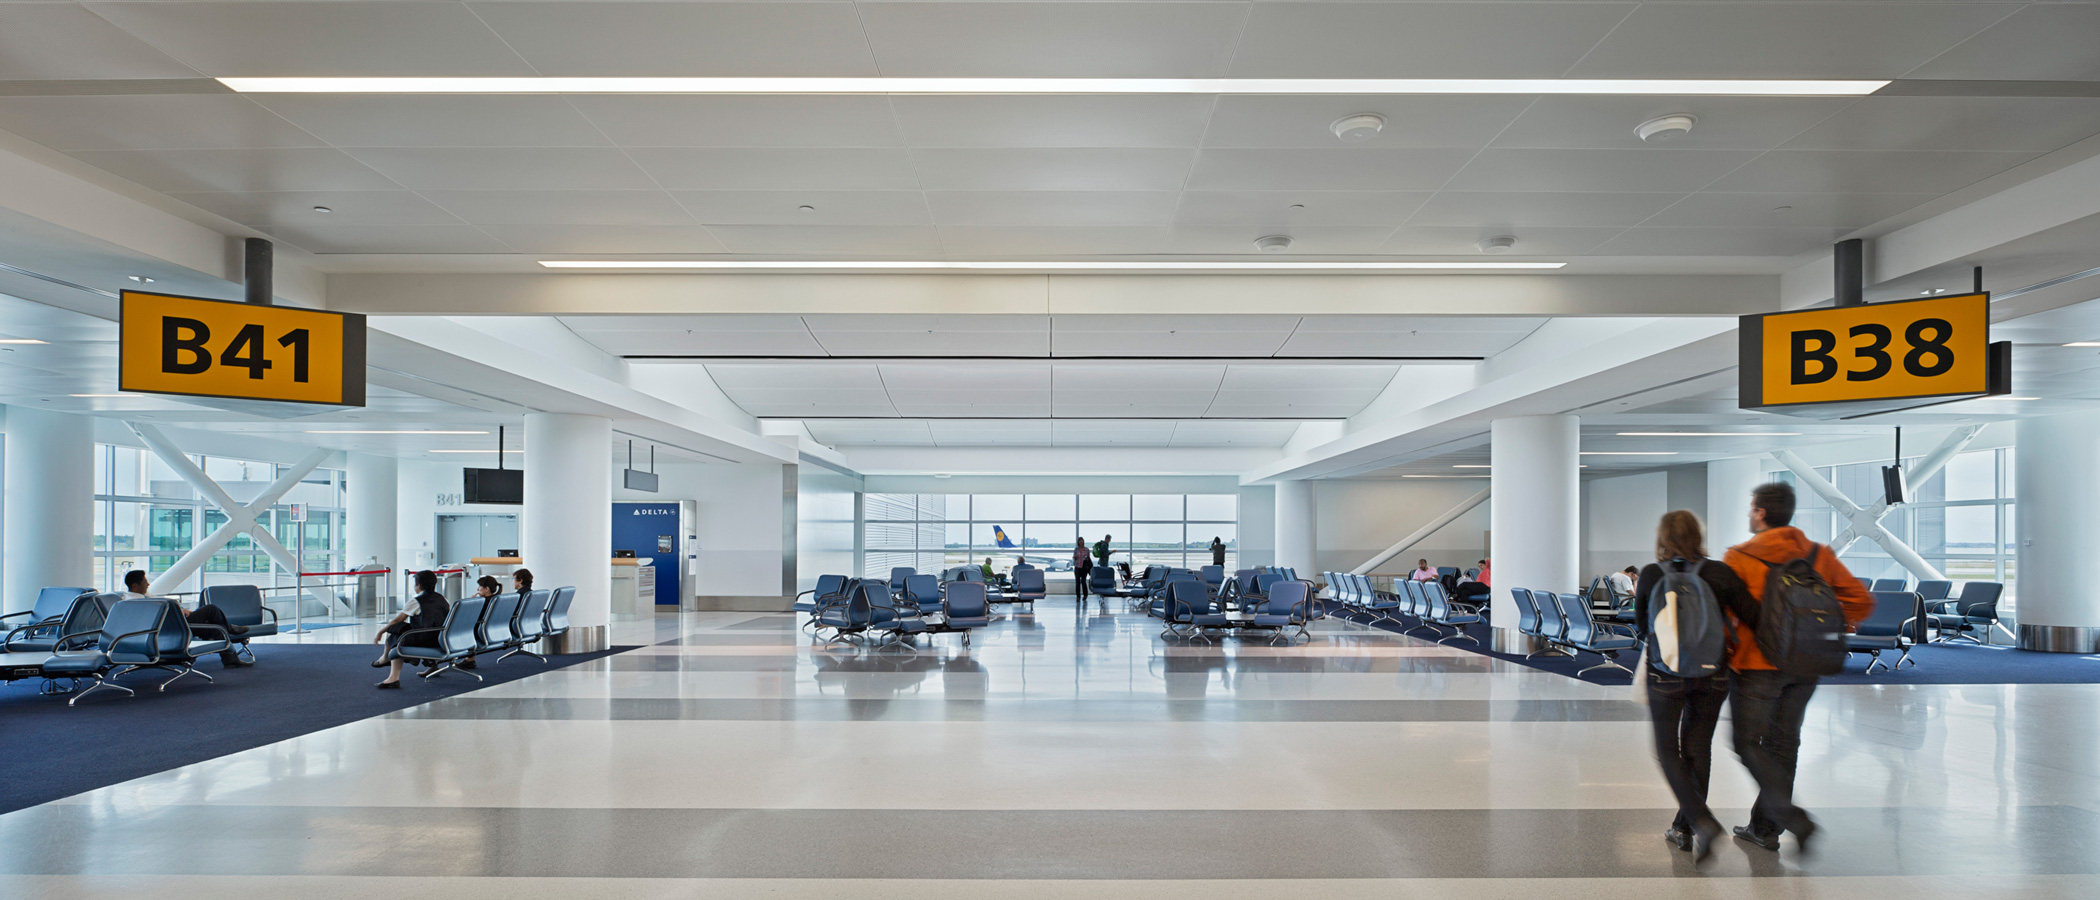 JFK International Airport Terminal 4